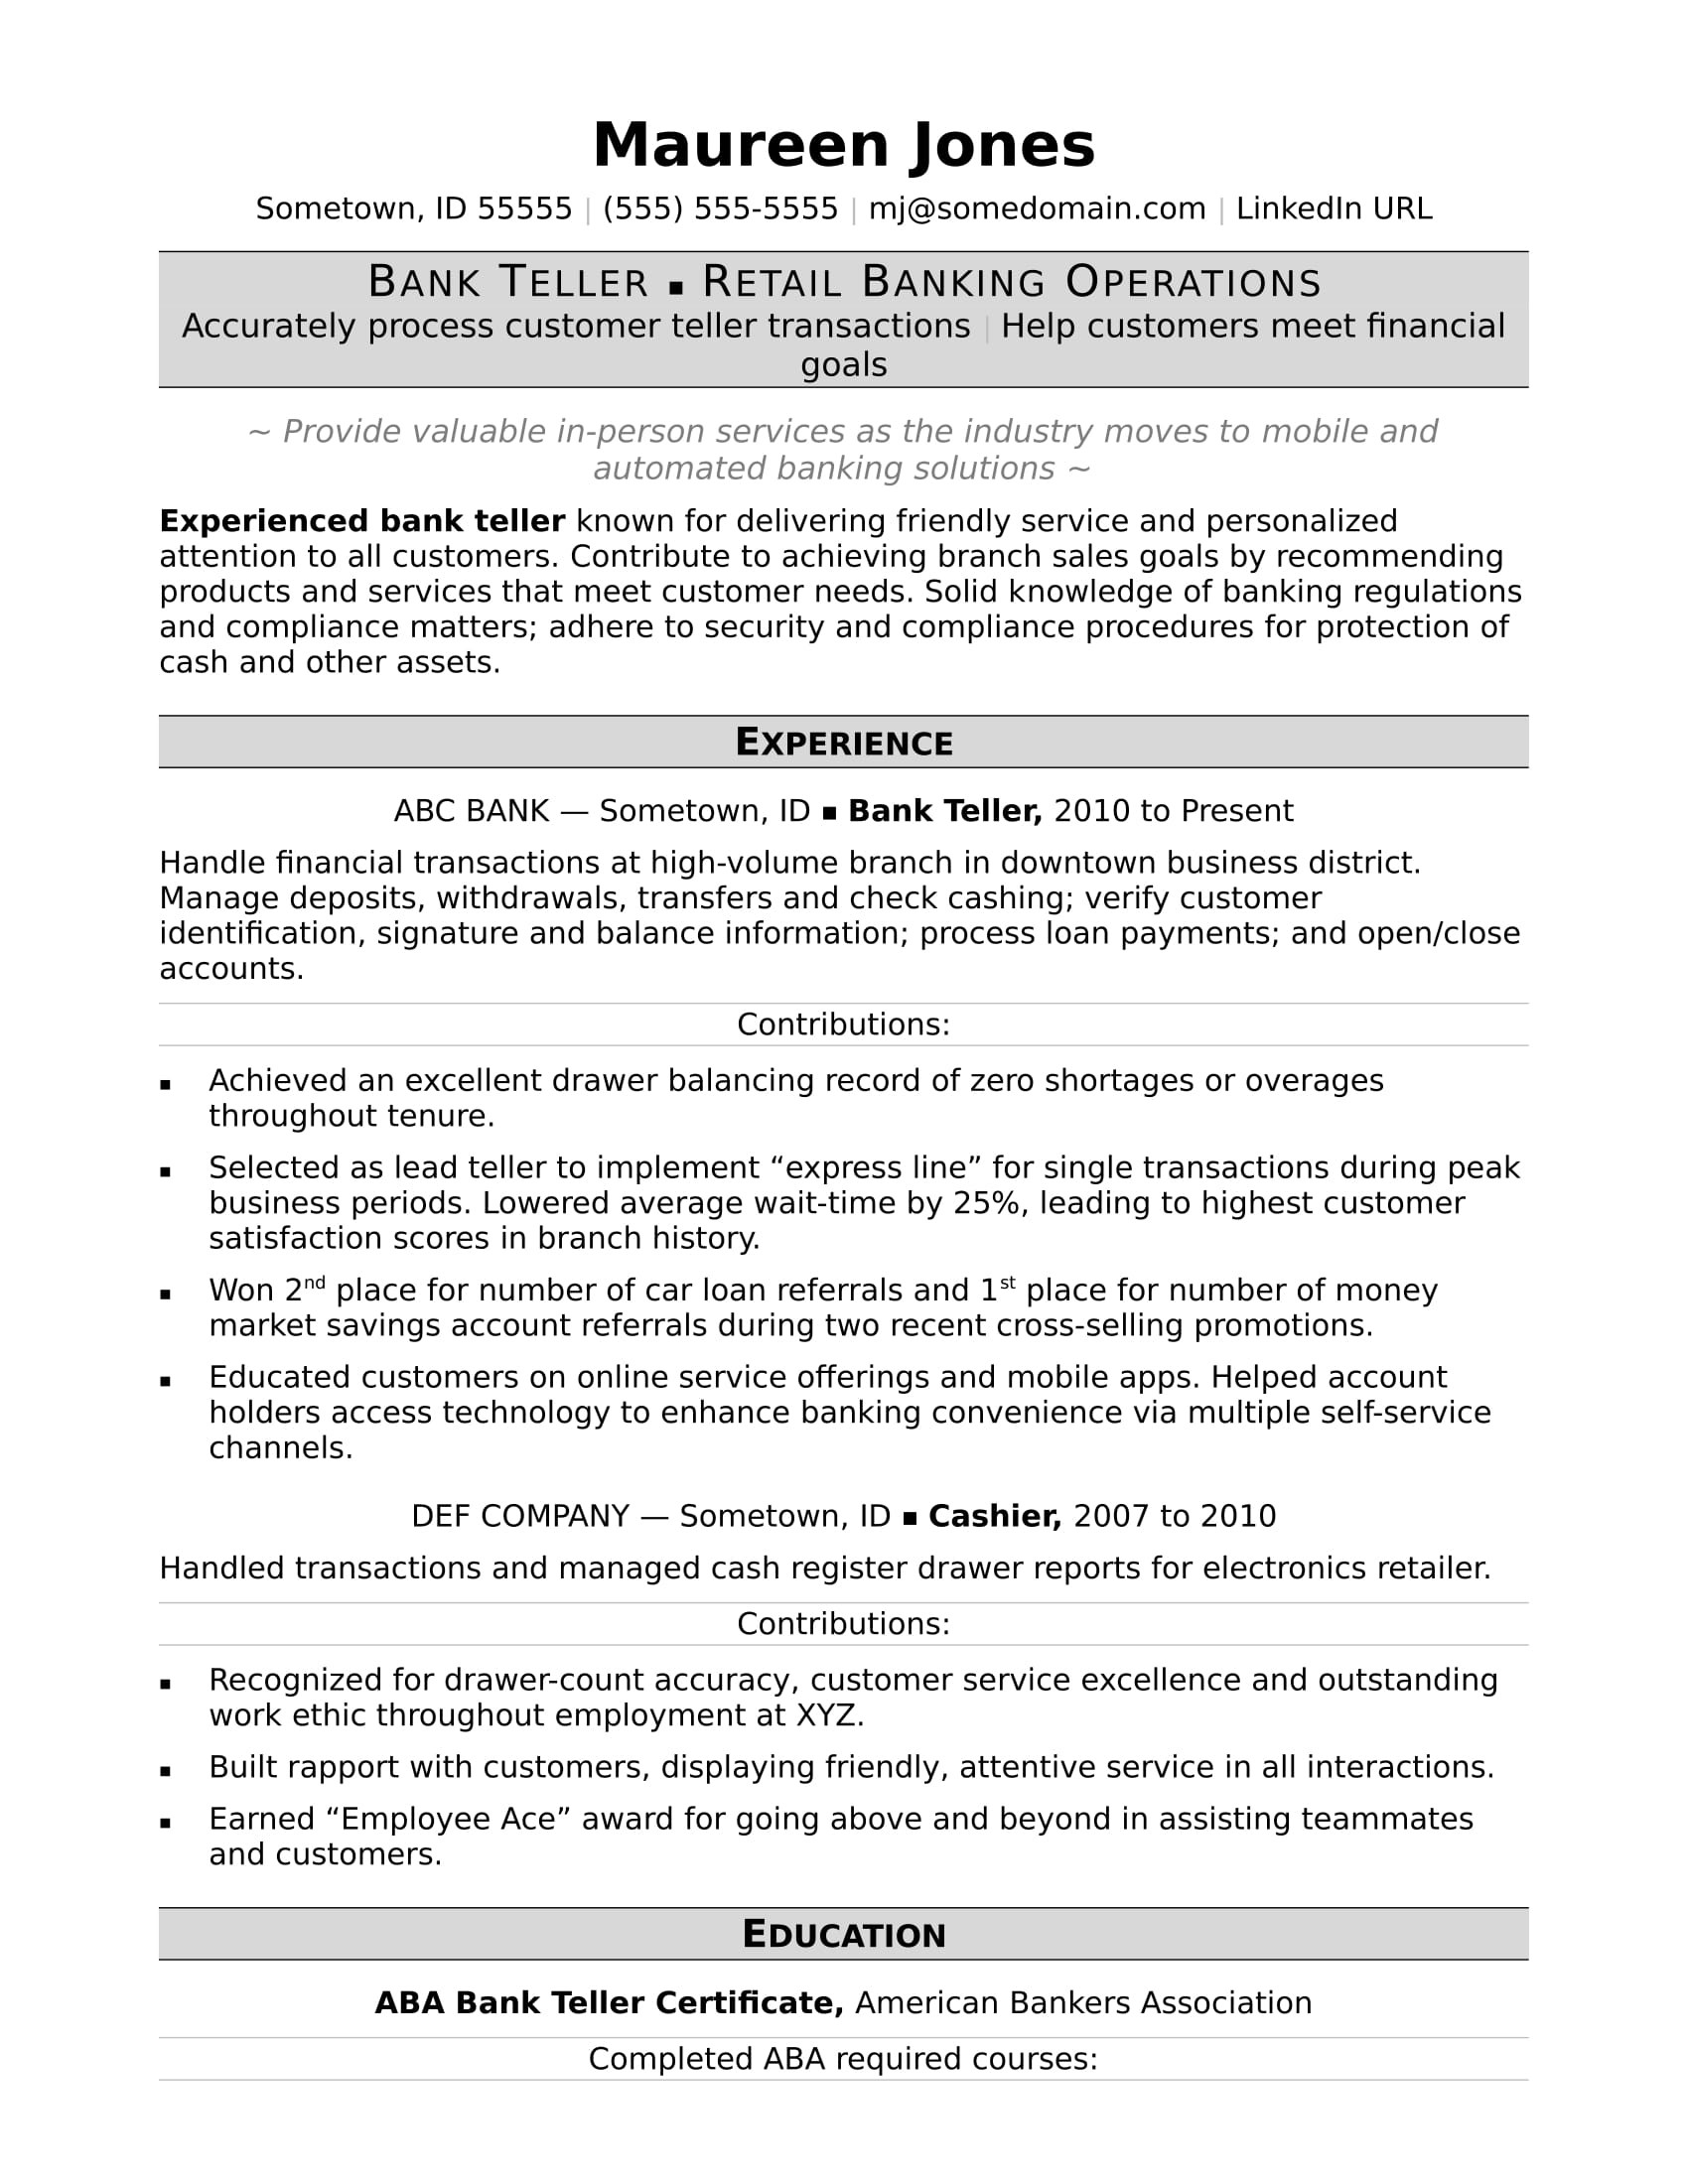 Resume Samples for Bank Customer Service Representative Bank Teller Resume Monster.com